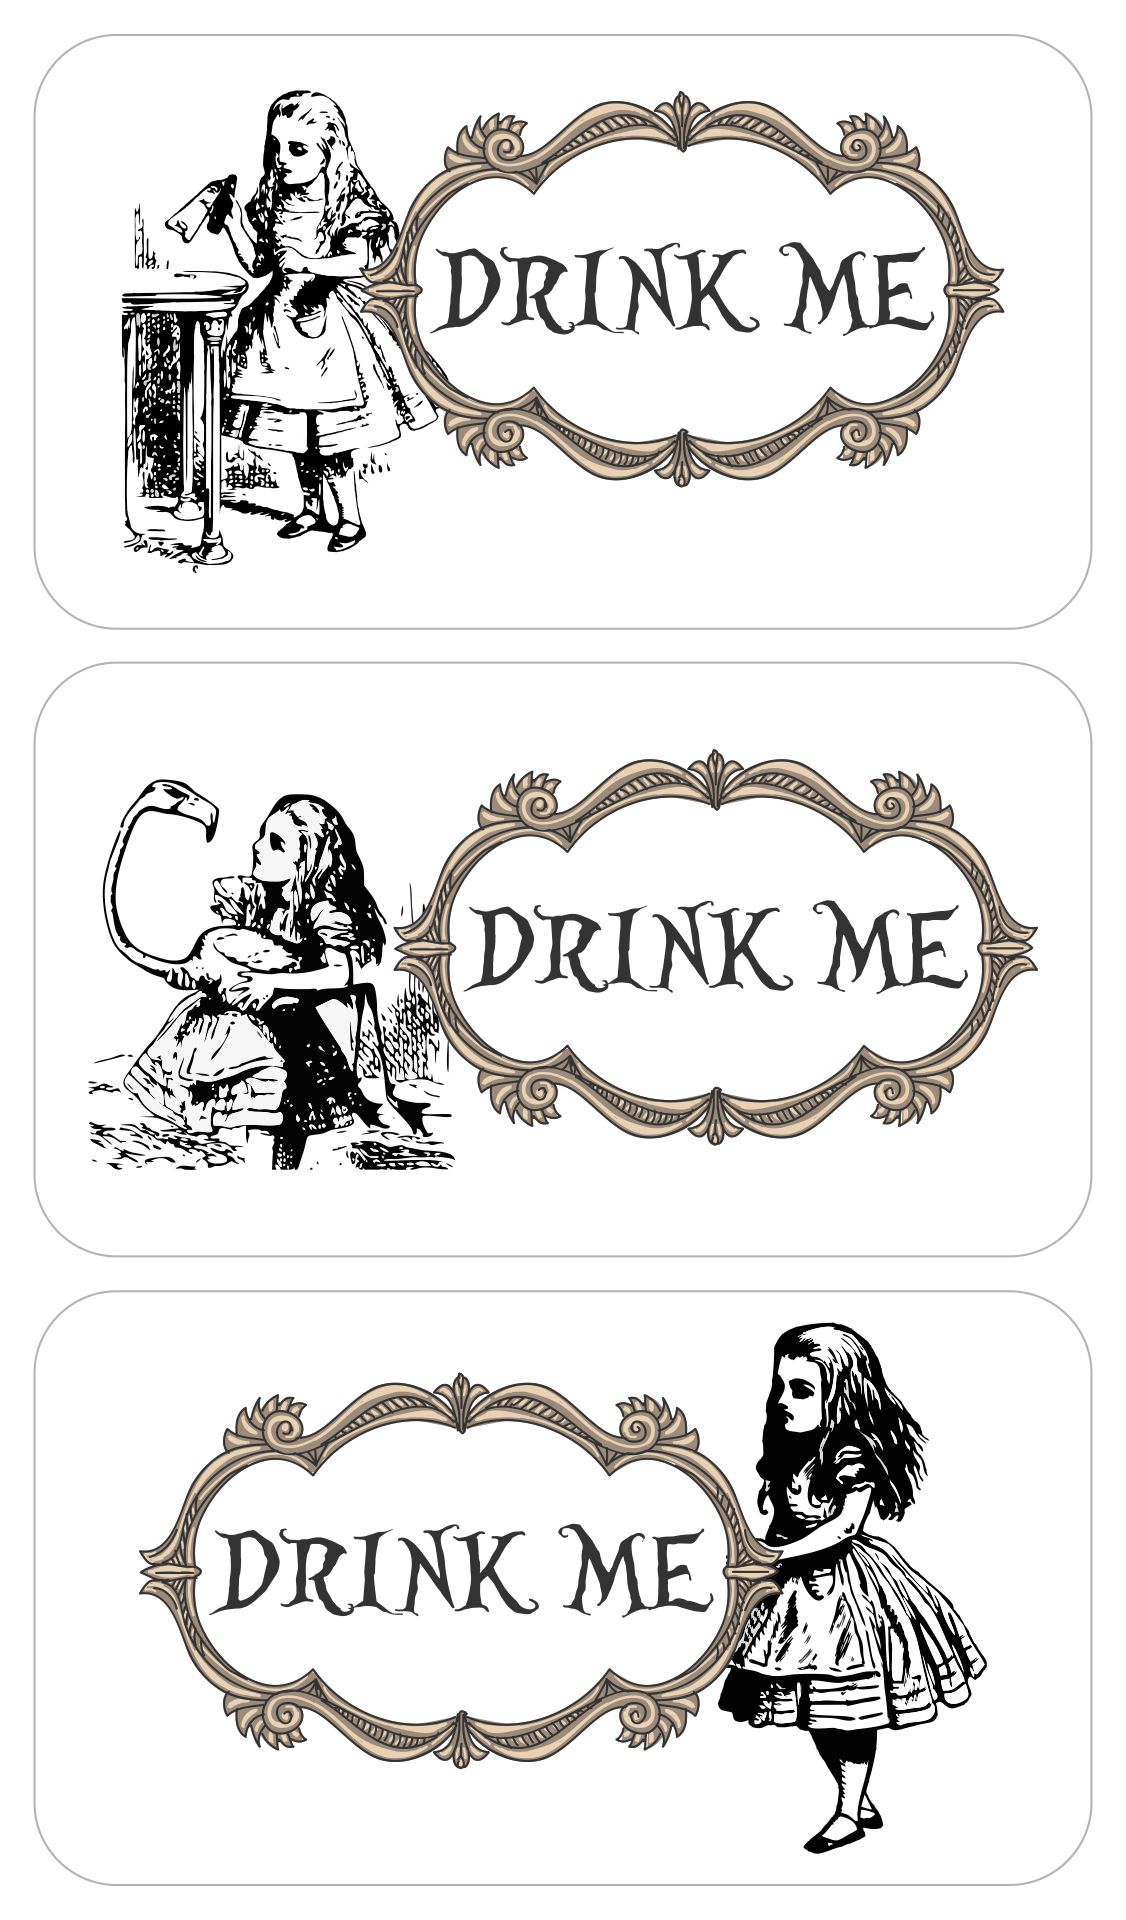 13-best-eat-me-drink-me-printable-templates-pdf-for-free-at-printablee